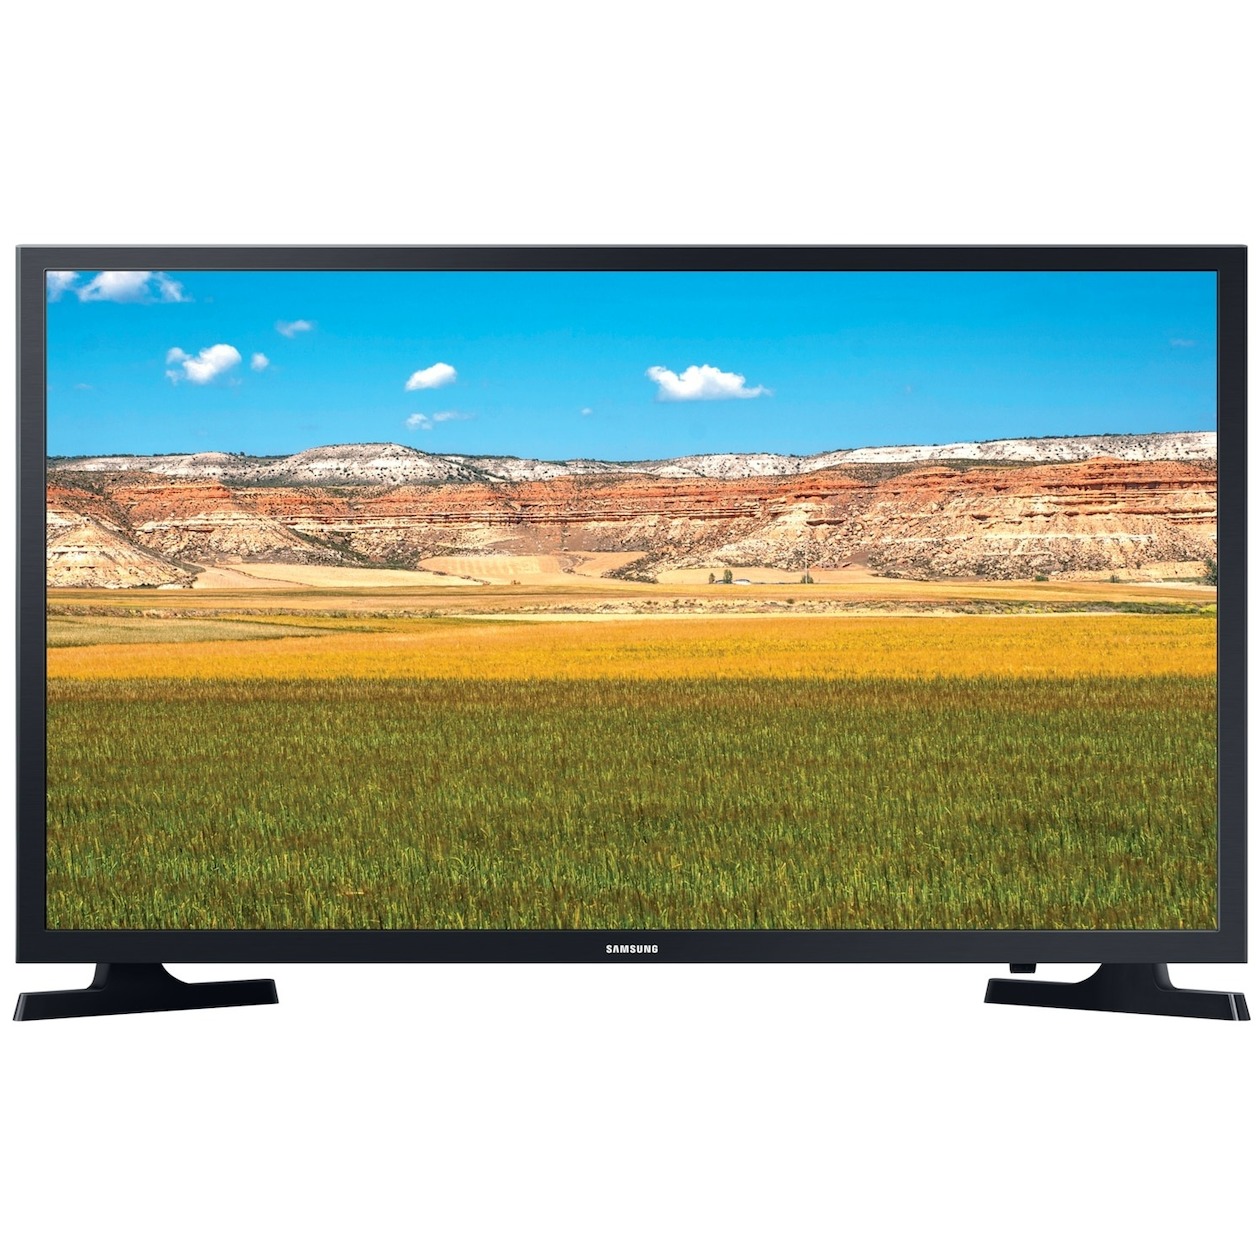 Samsung UE32T4302 - 32 inch - LED TV